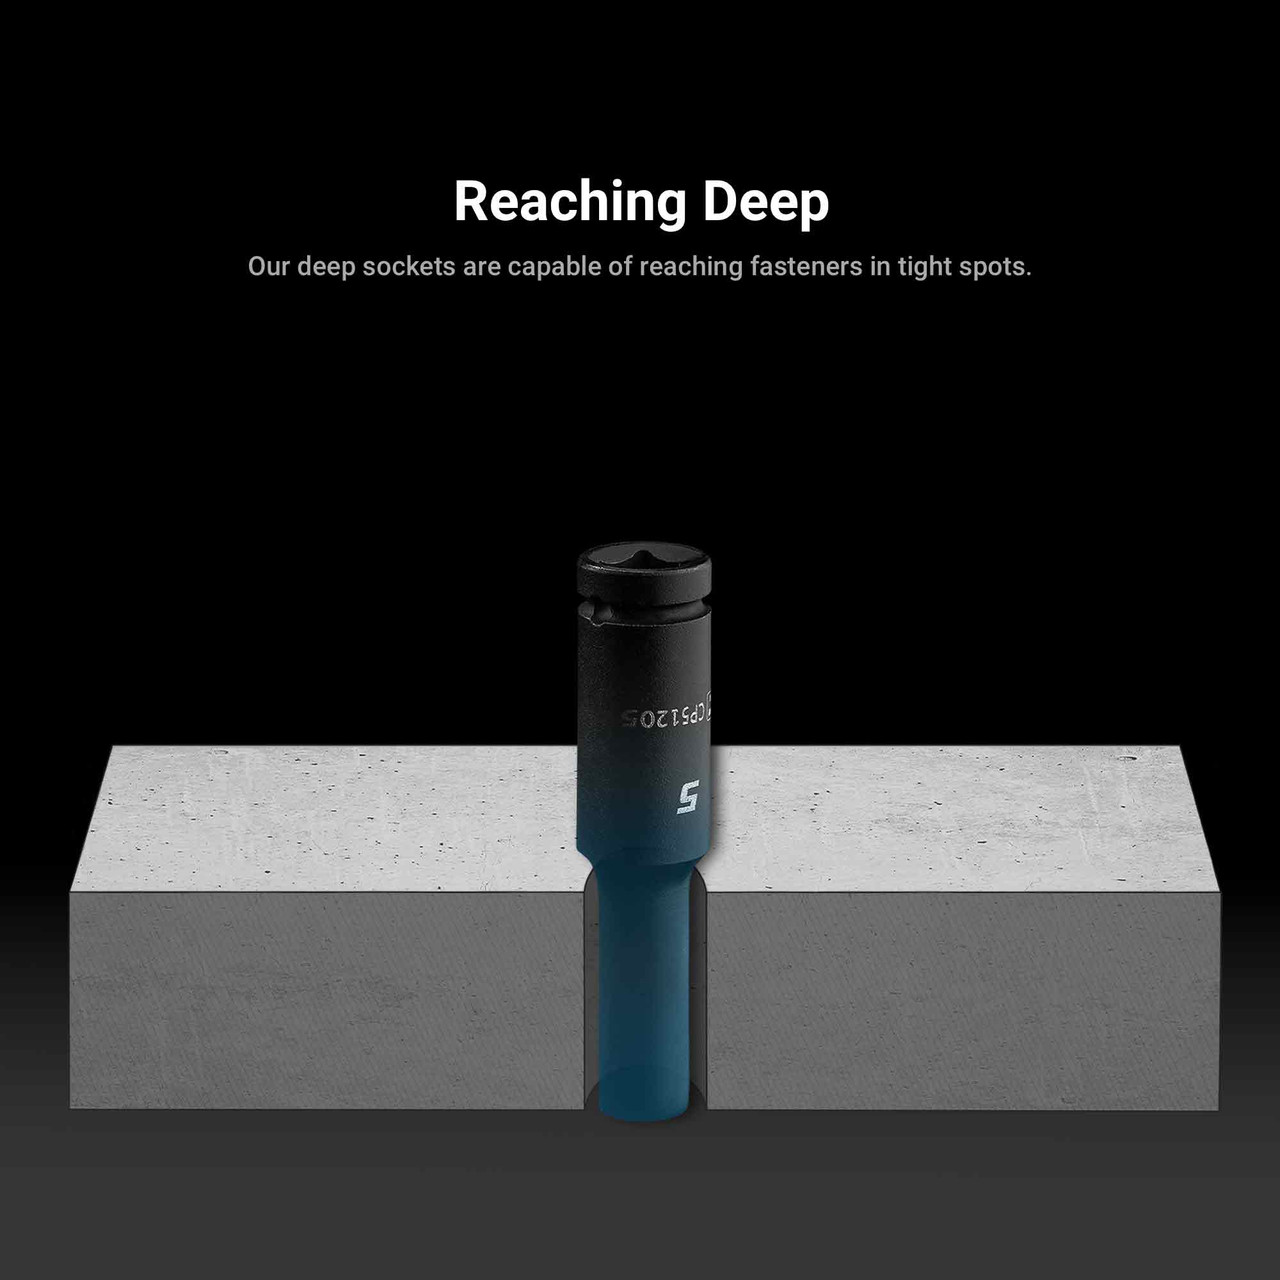 Capri Tools 5.5 mm Deep Impact Socket, 1/4-Inch Drive, 6-Point, Metric